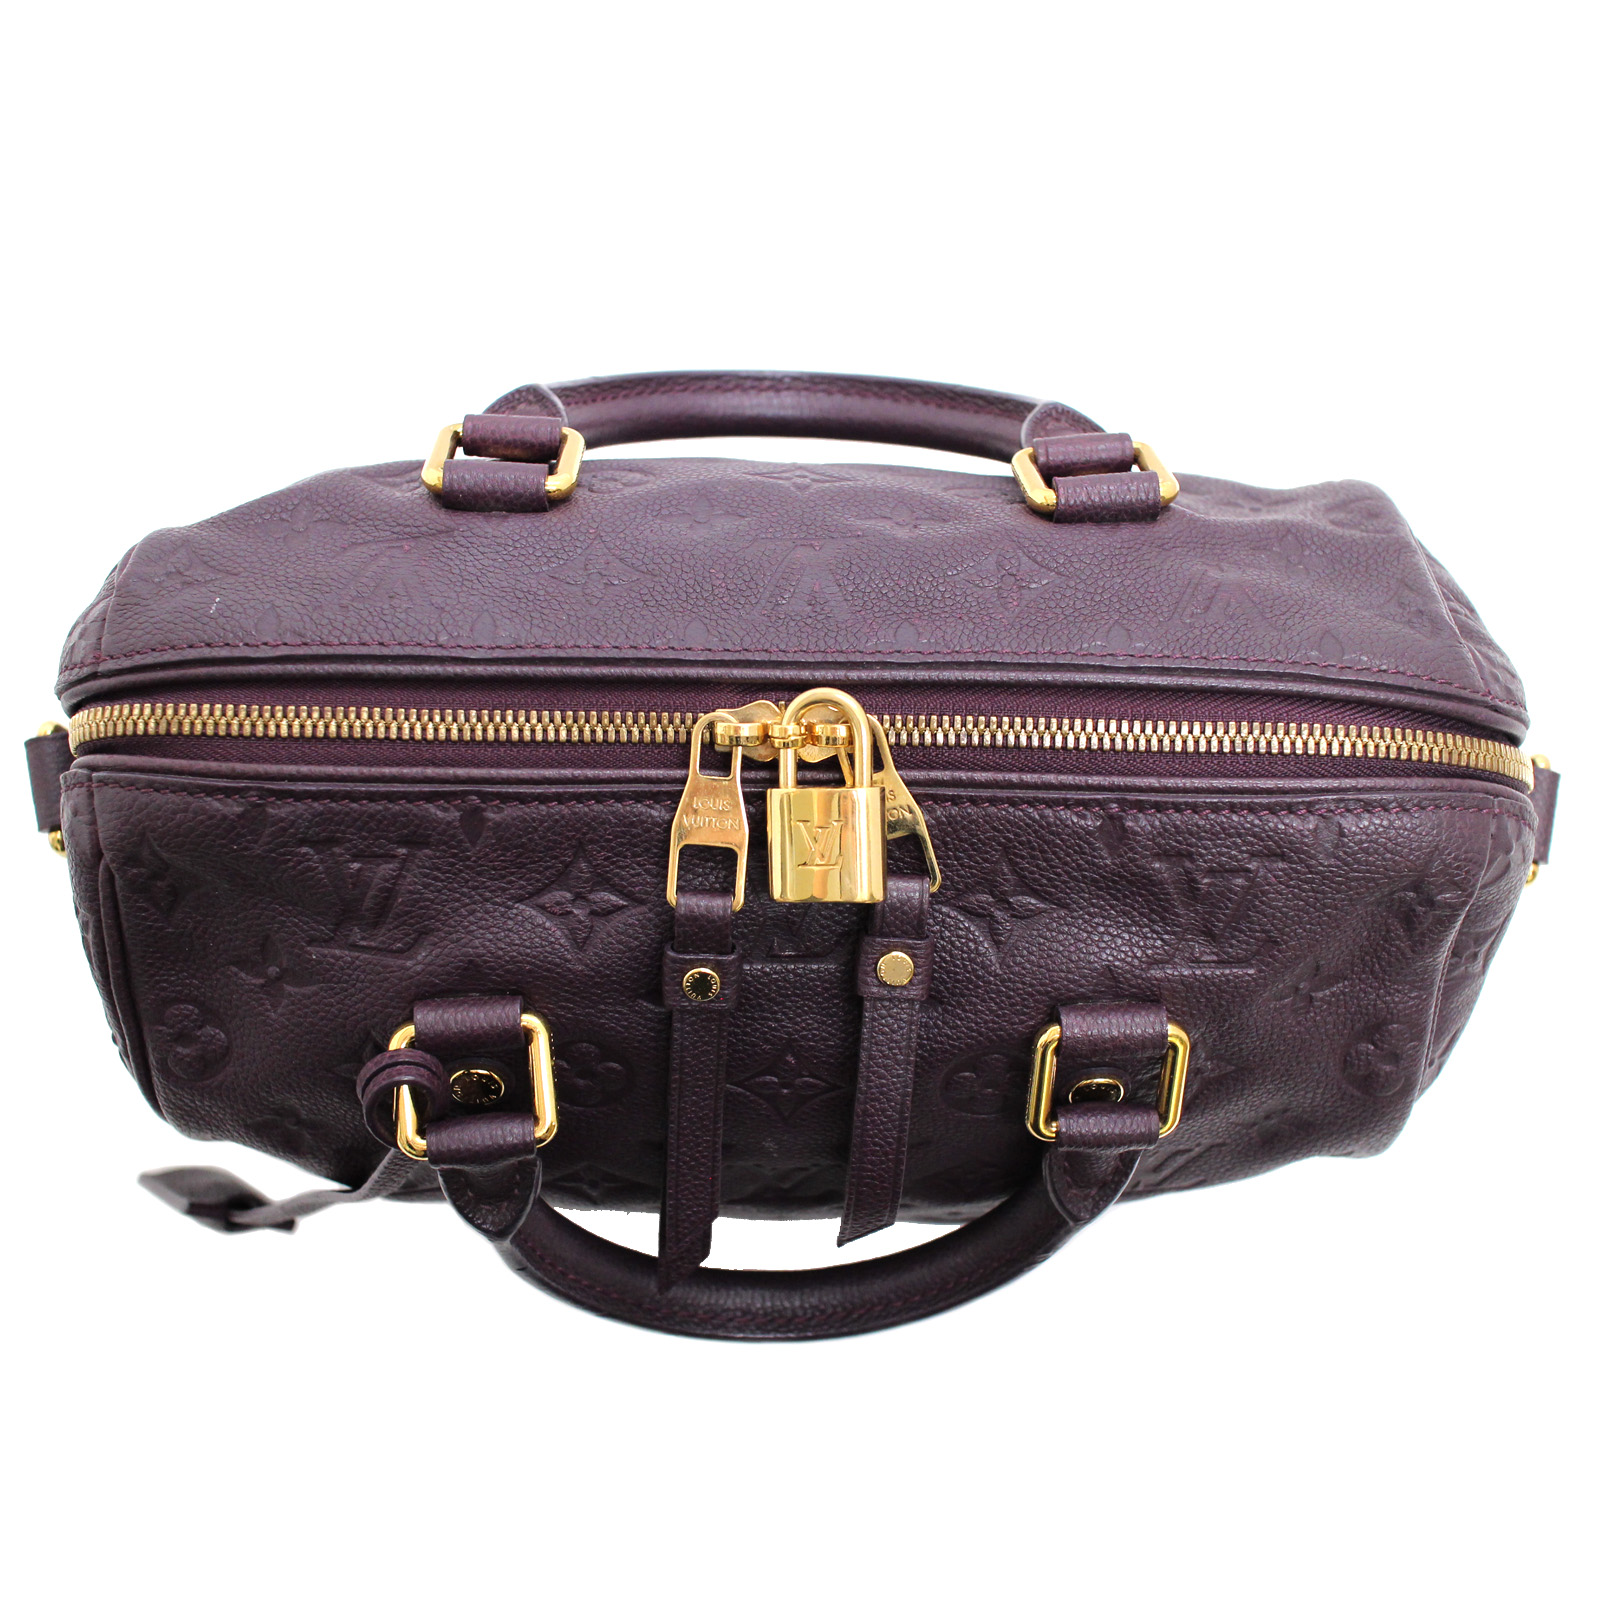 Sold at Auction: Louis Vuitton, LOUIS VUITTON Handbag SPEEDY 25 BAND..